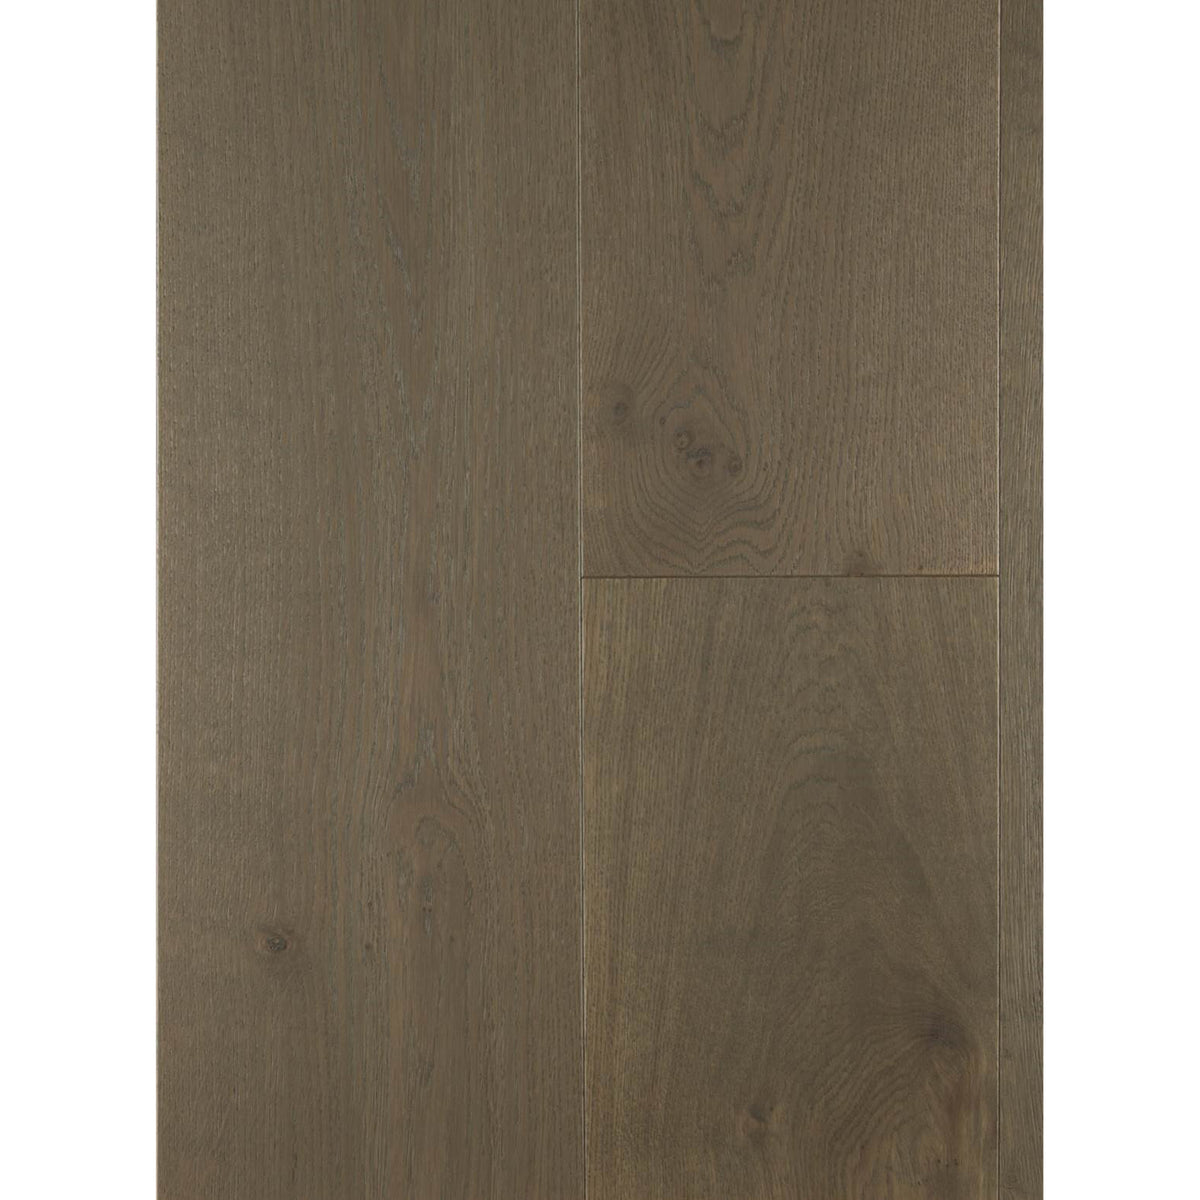 LM Flooring - Big Sky Collection - Bobsled Oak